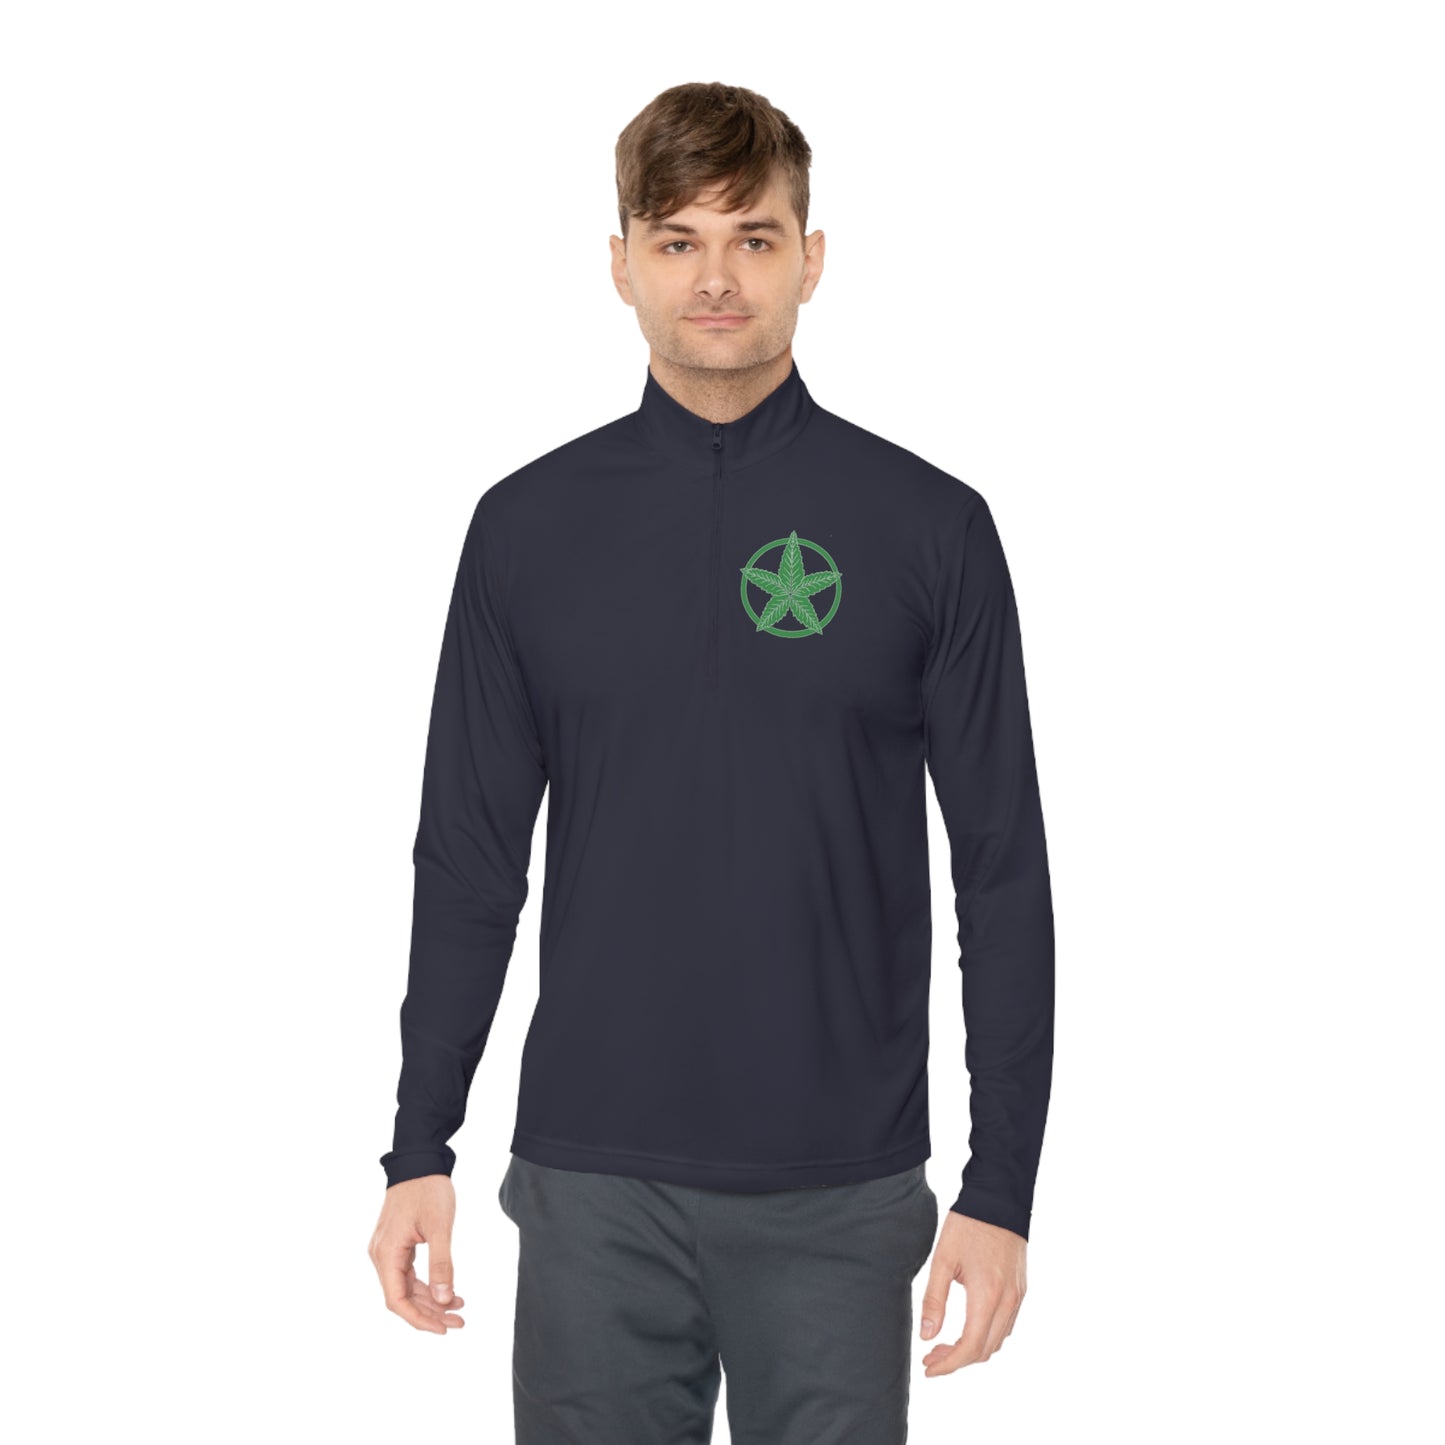 Green Army Unisex Quarter-Zip Pullover